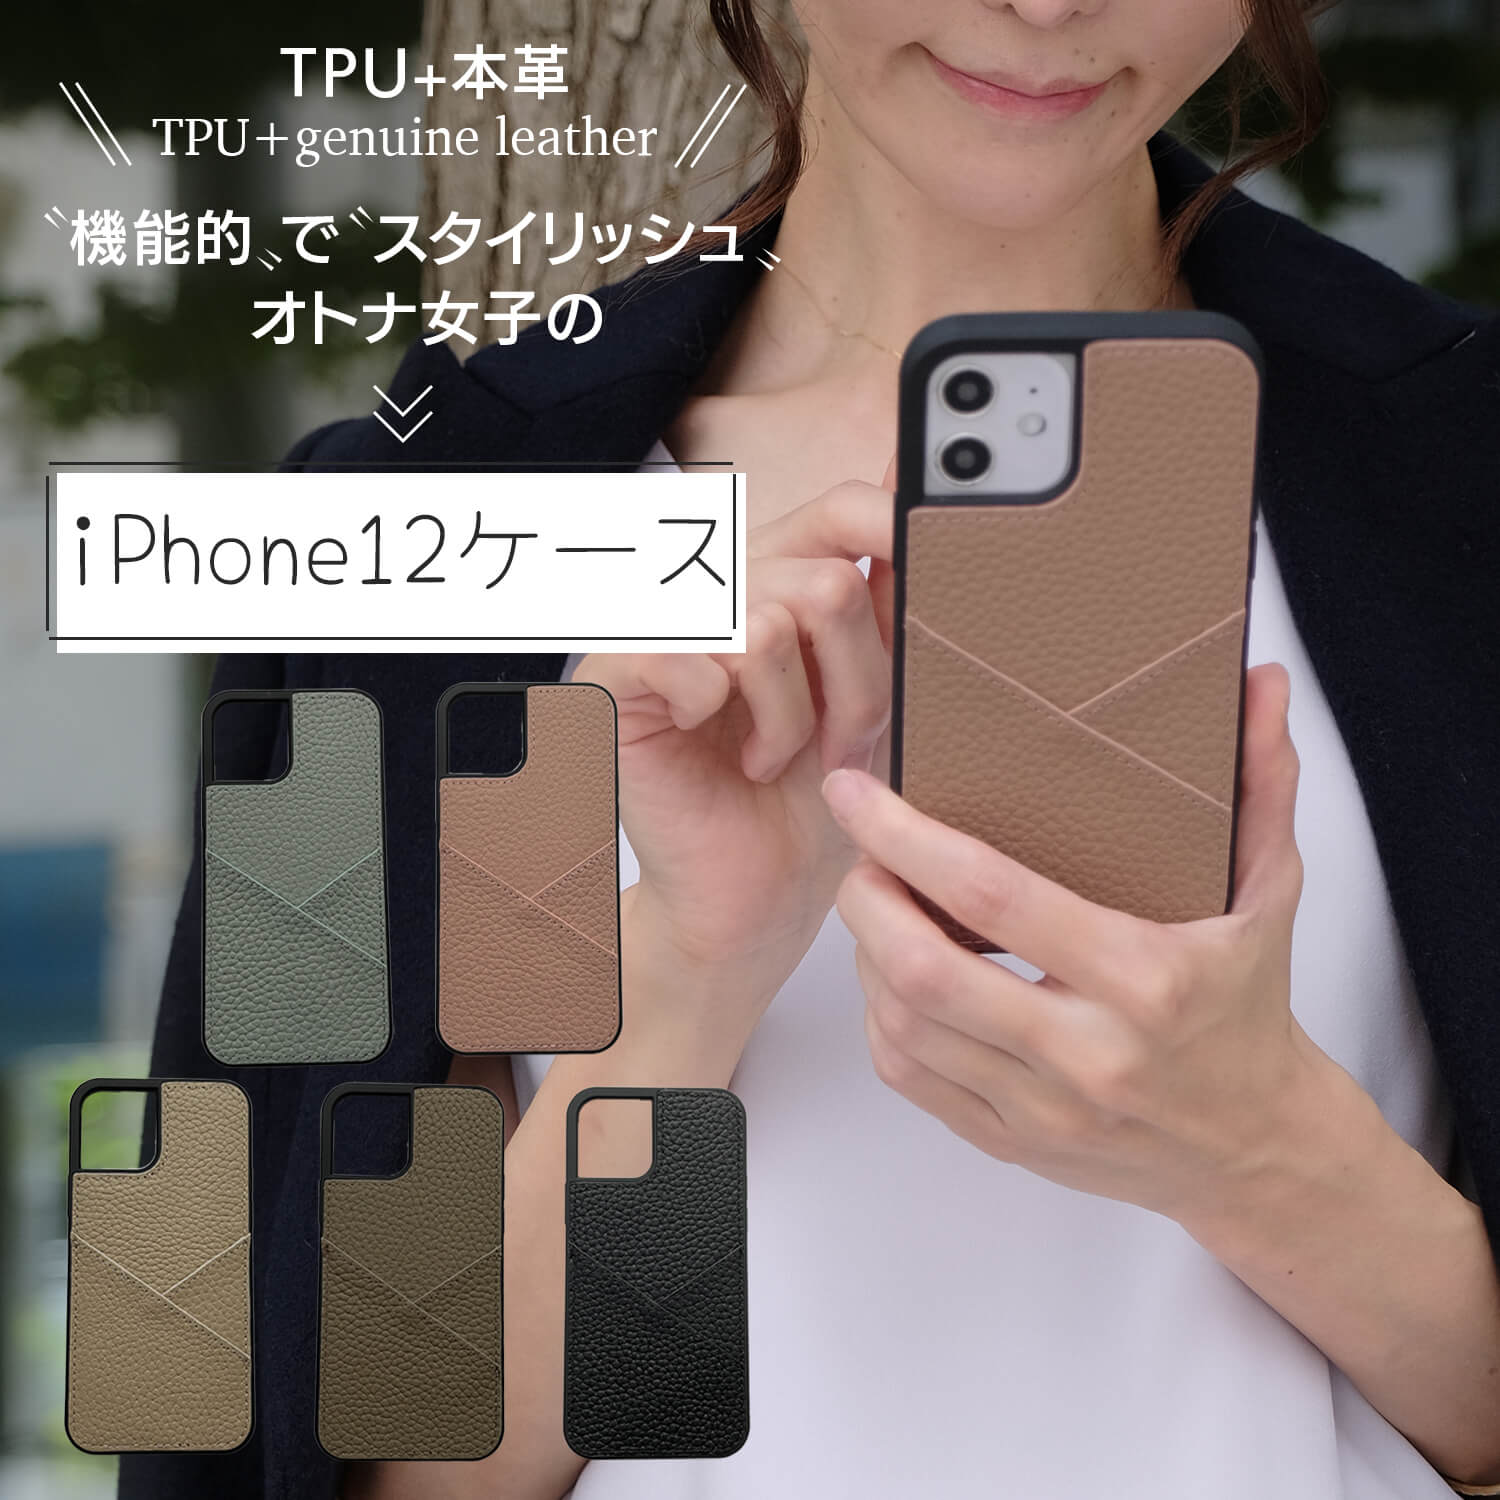 TPU+本革 TPU+genuine leather 機能的でスタイリッシュ、 オトナ女子の iPhone12ケース